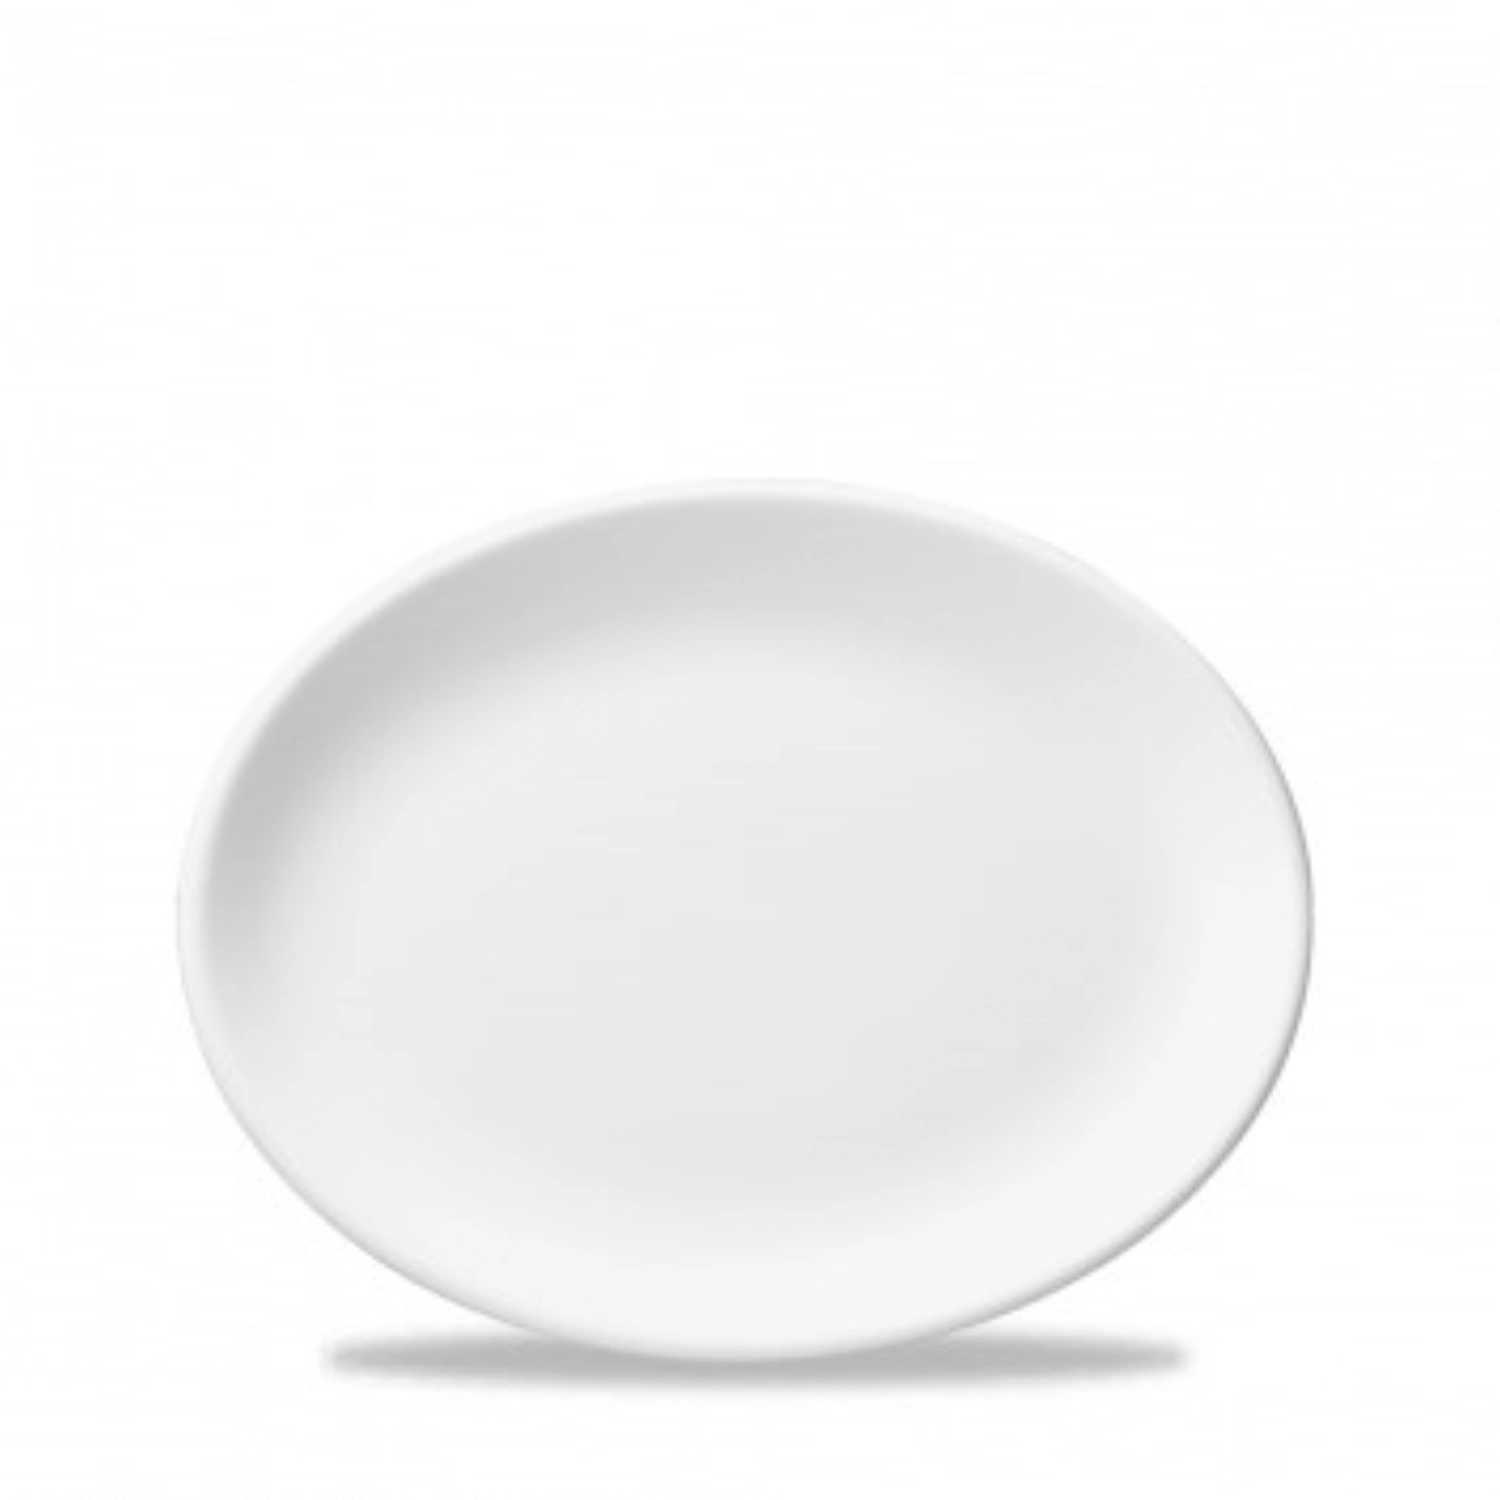 Whiteware White ovaler Teller / Servierplatte